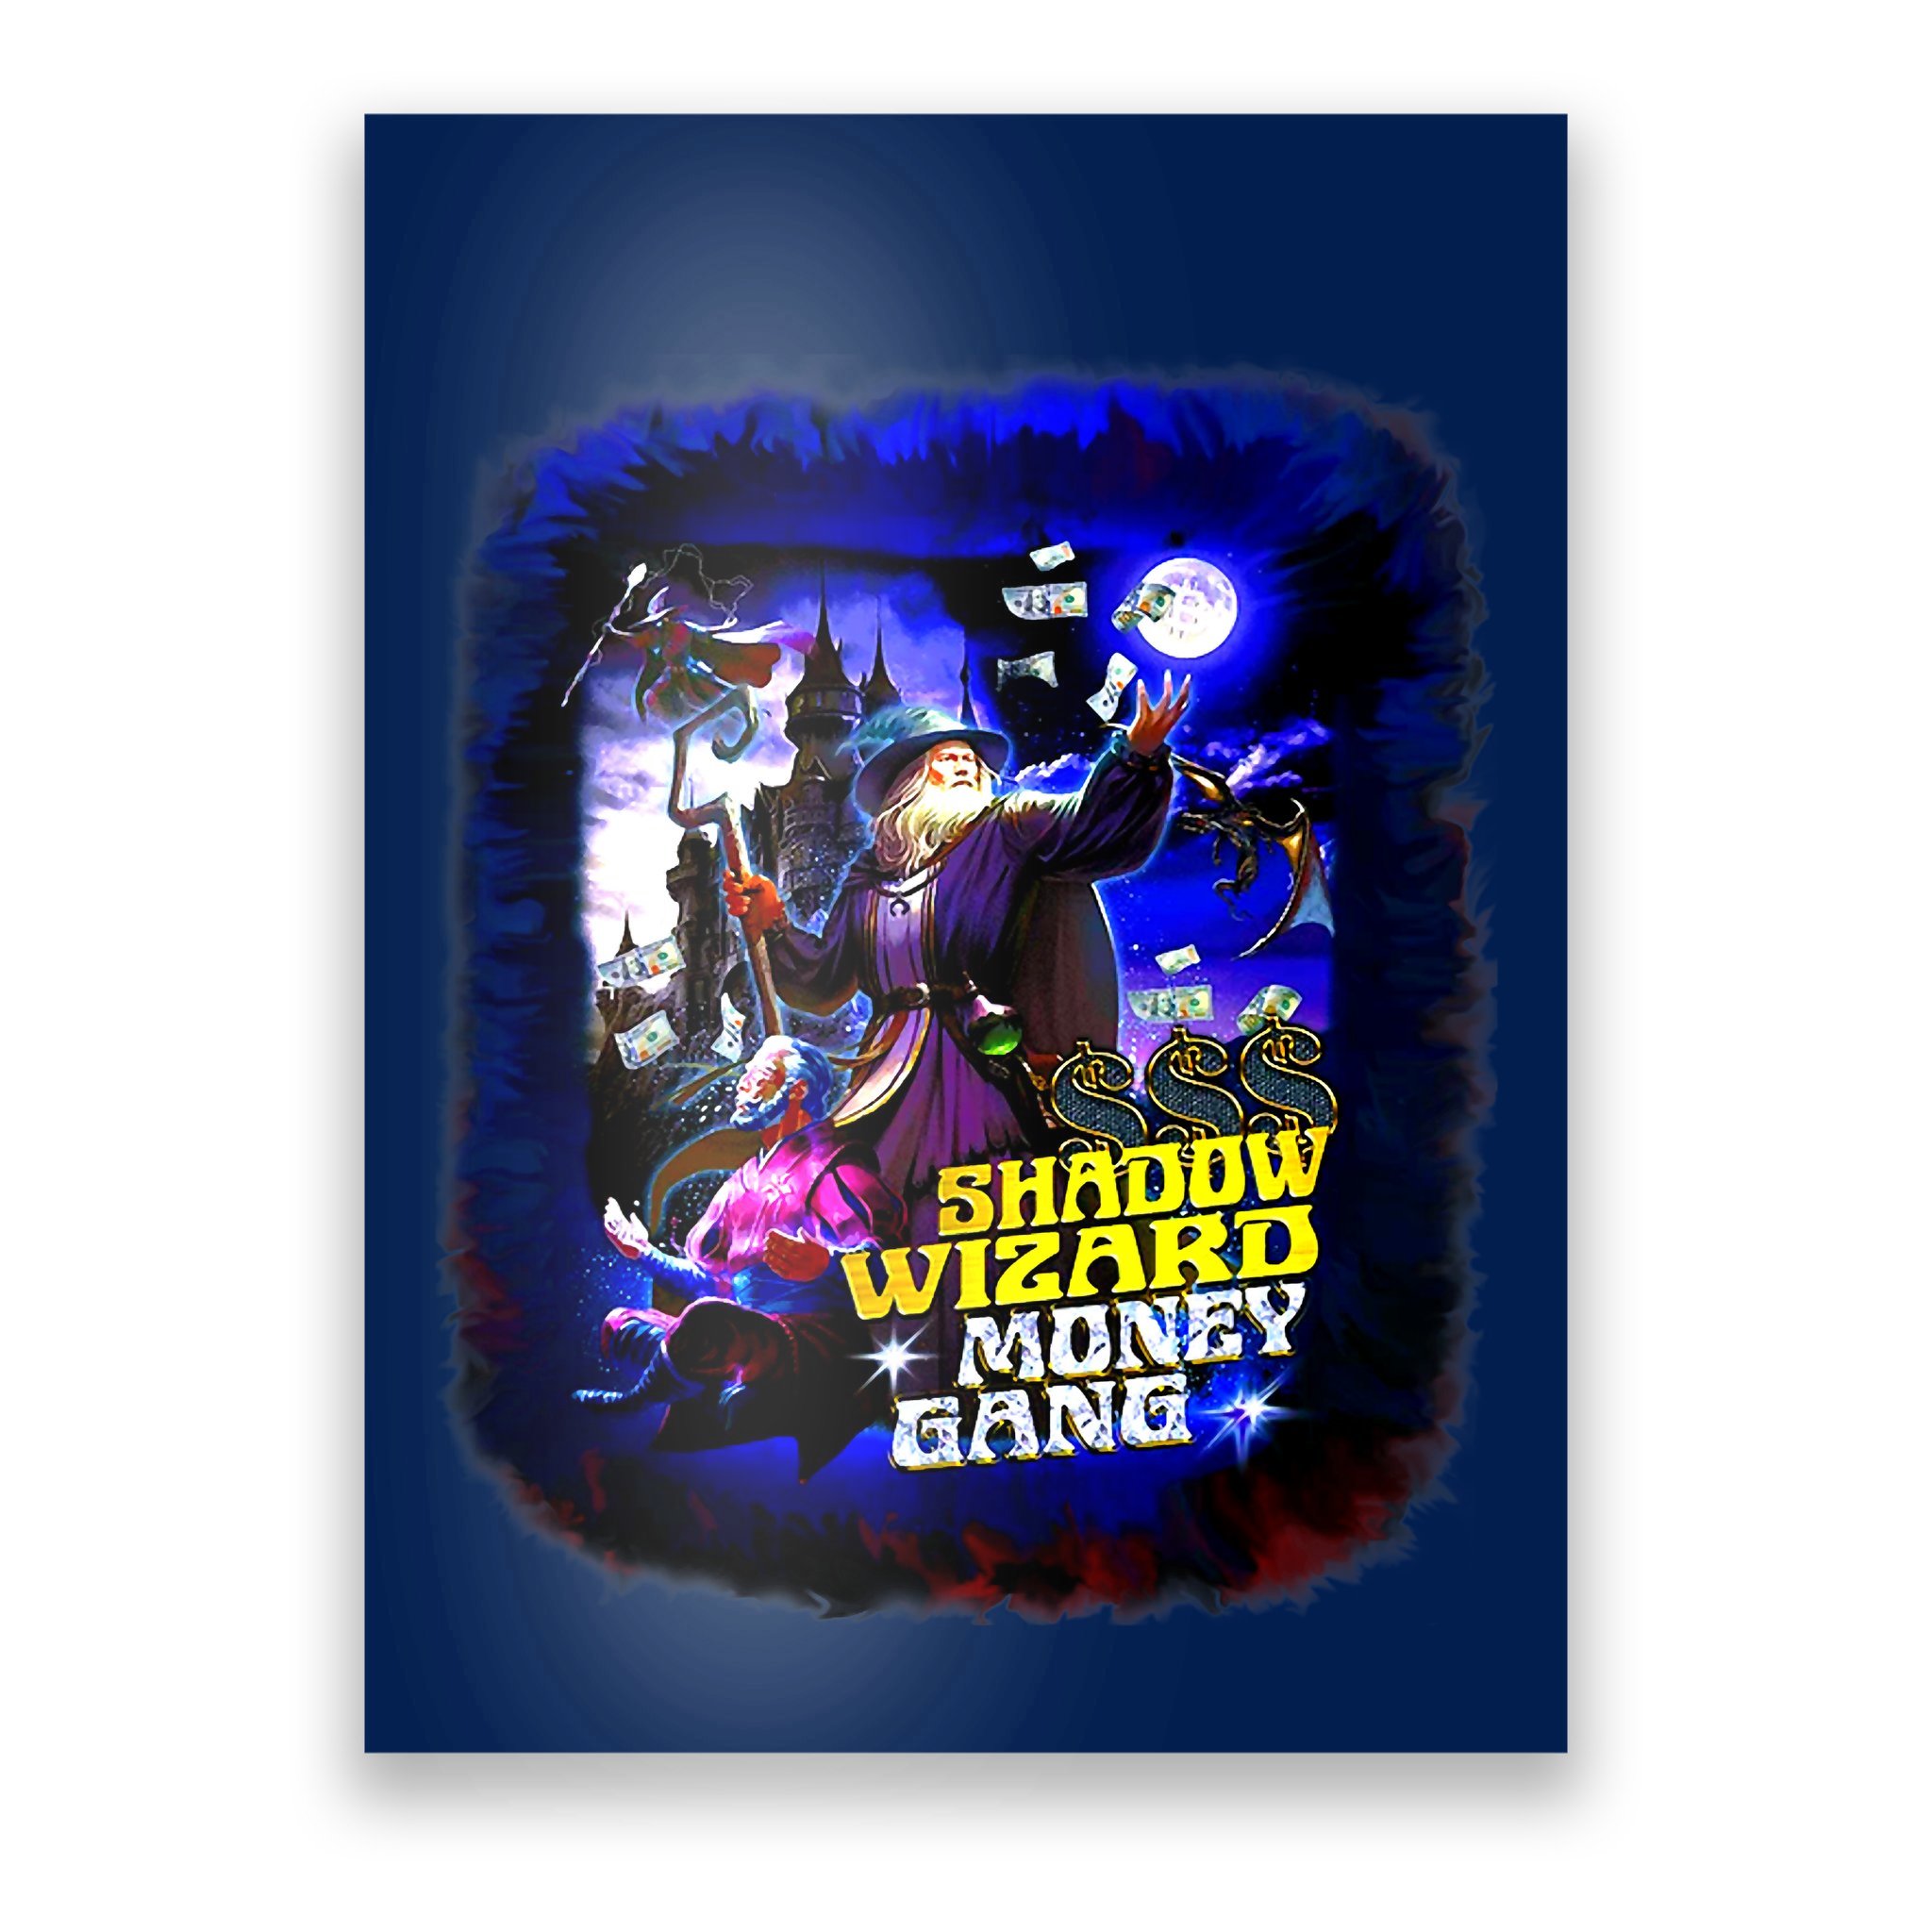 ZachJaDa on X: shadow wizard money gang or epic fisher funny group?   / X